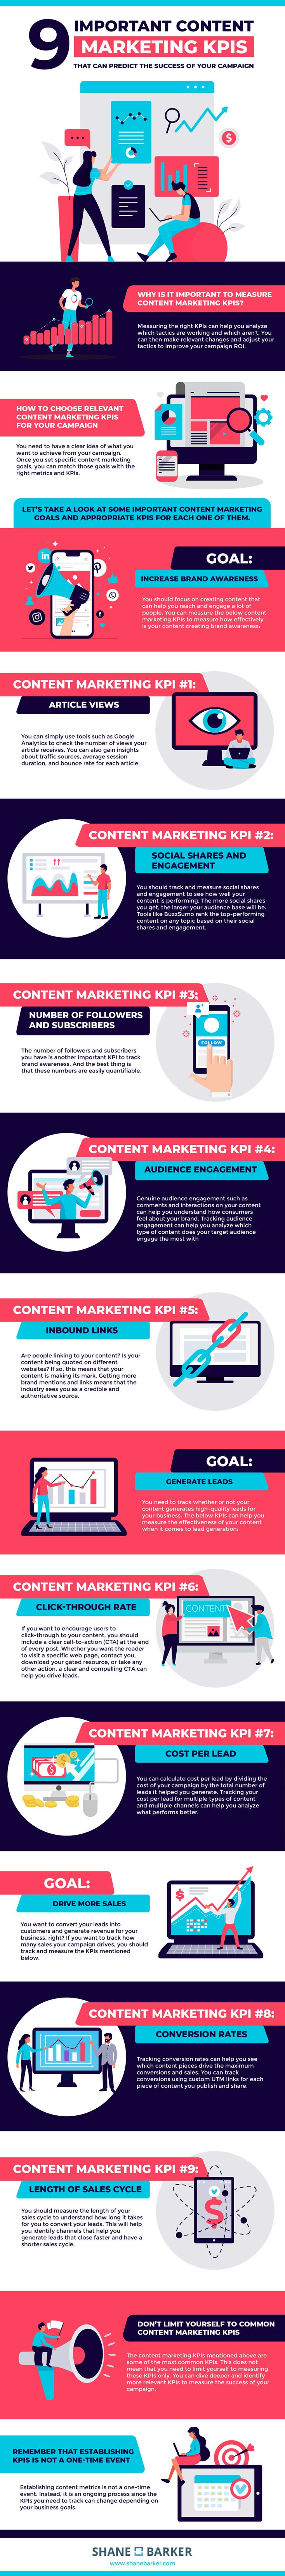 Content-Marketing-KPIs-(1).jpg